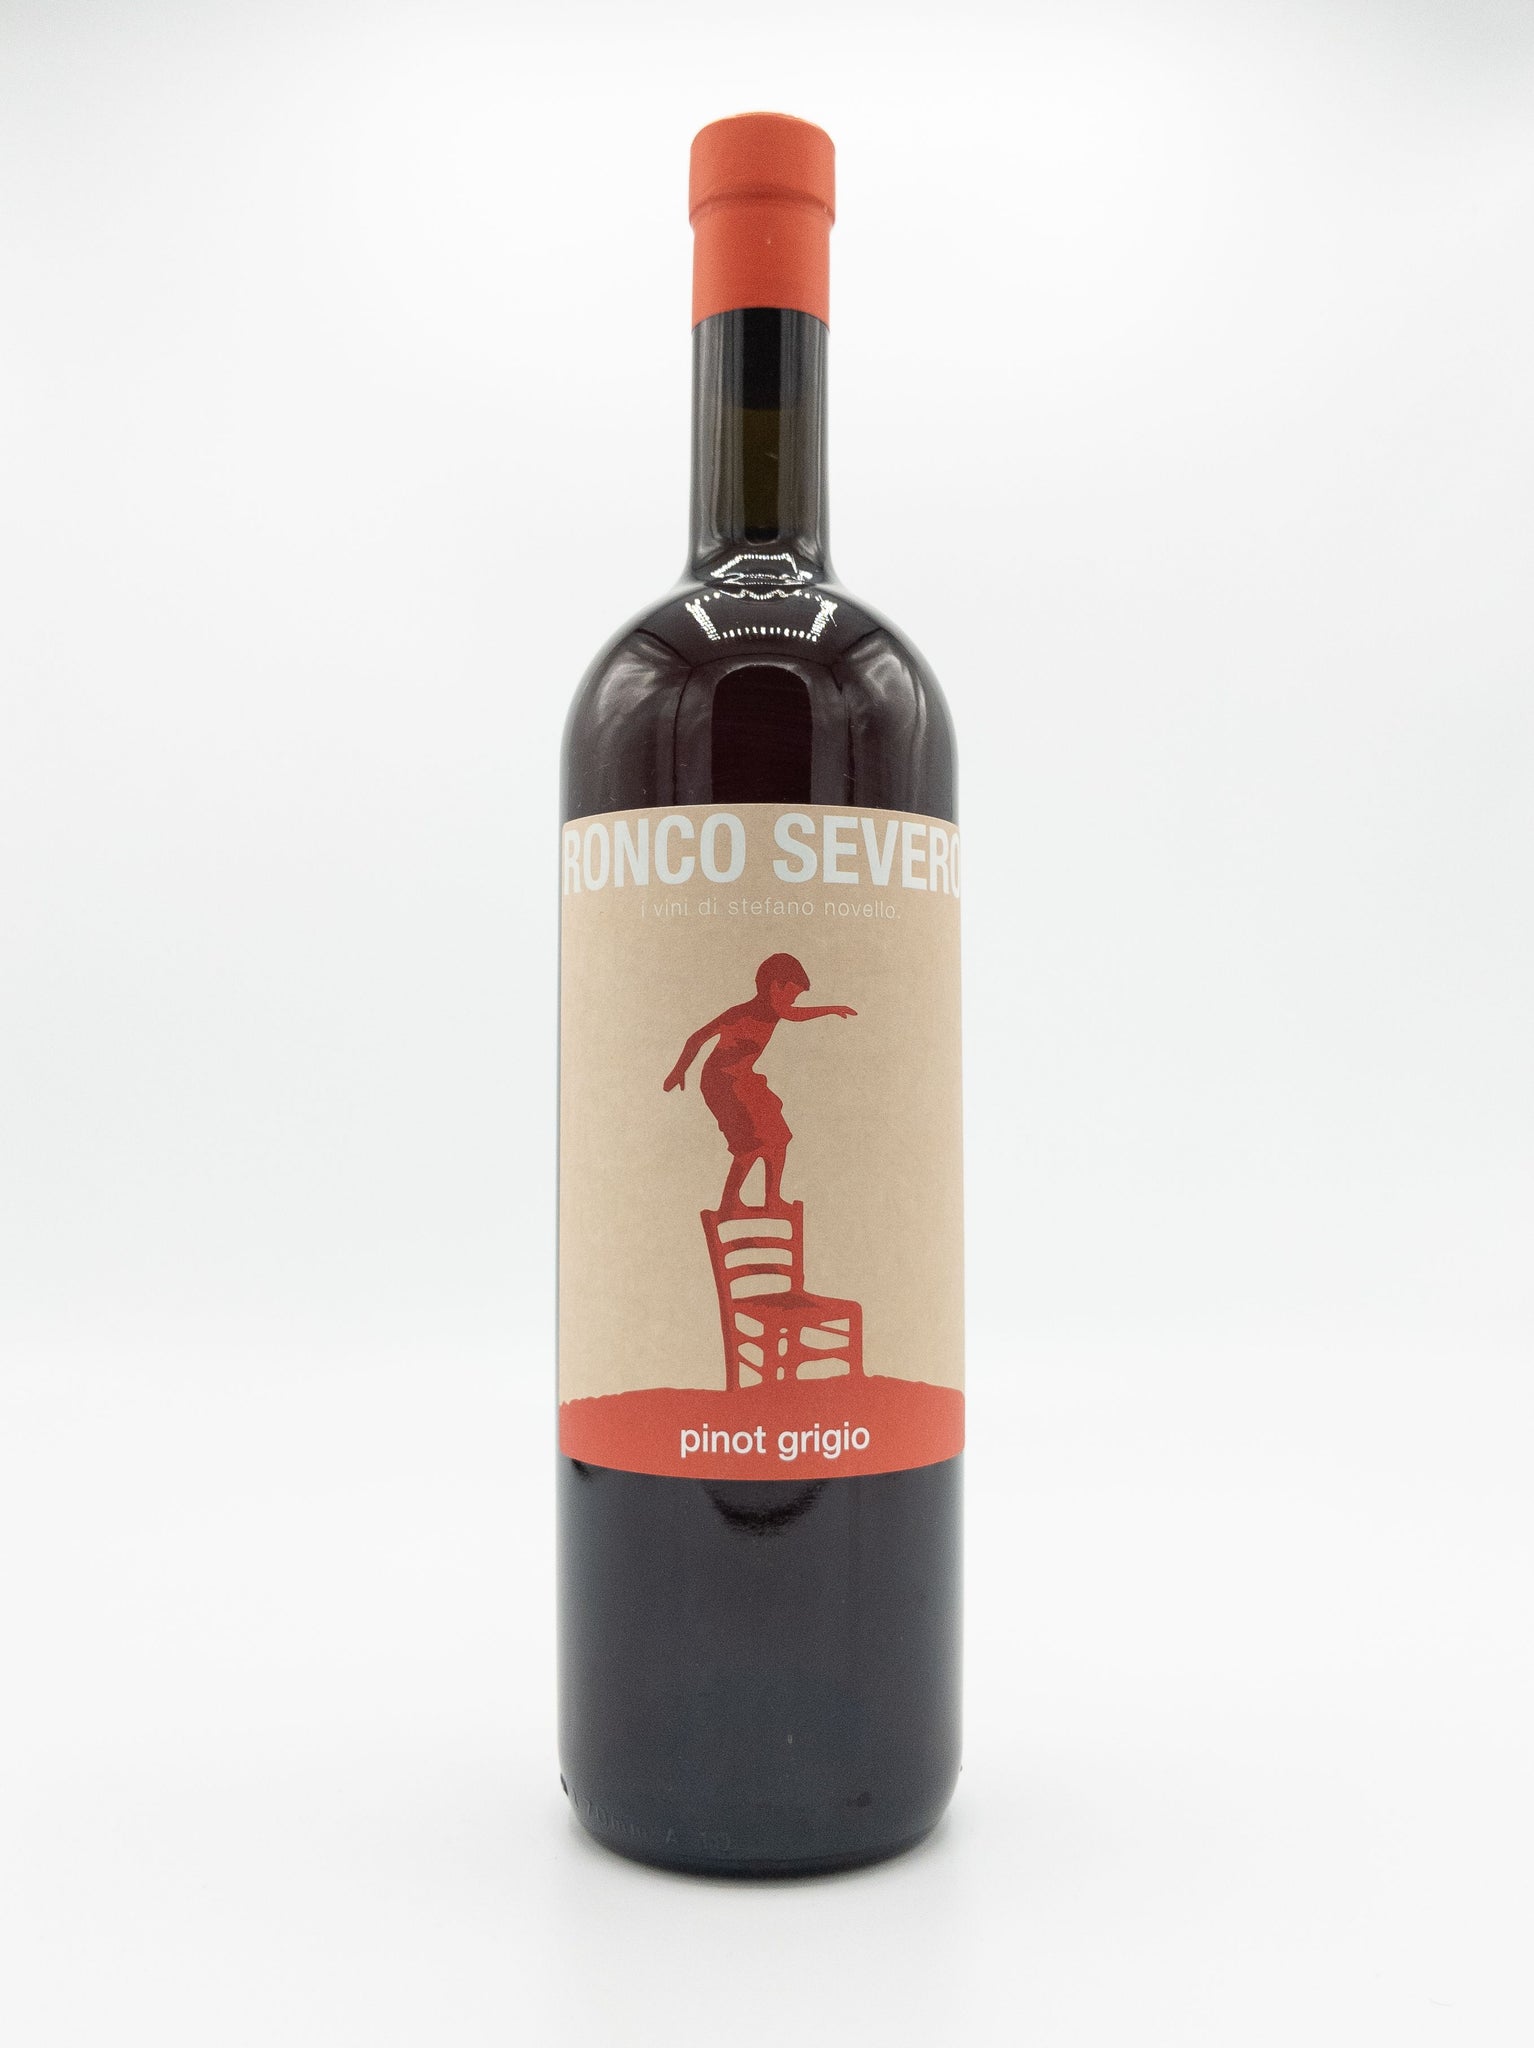 Ronco Severo 'Pinot Grigio' 2017